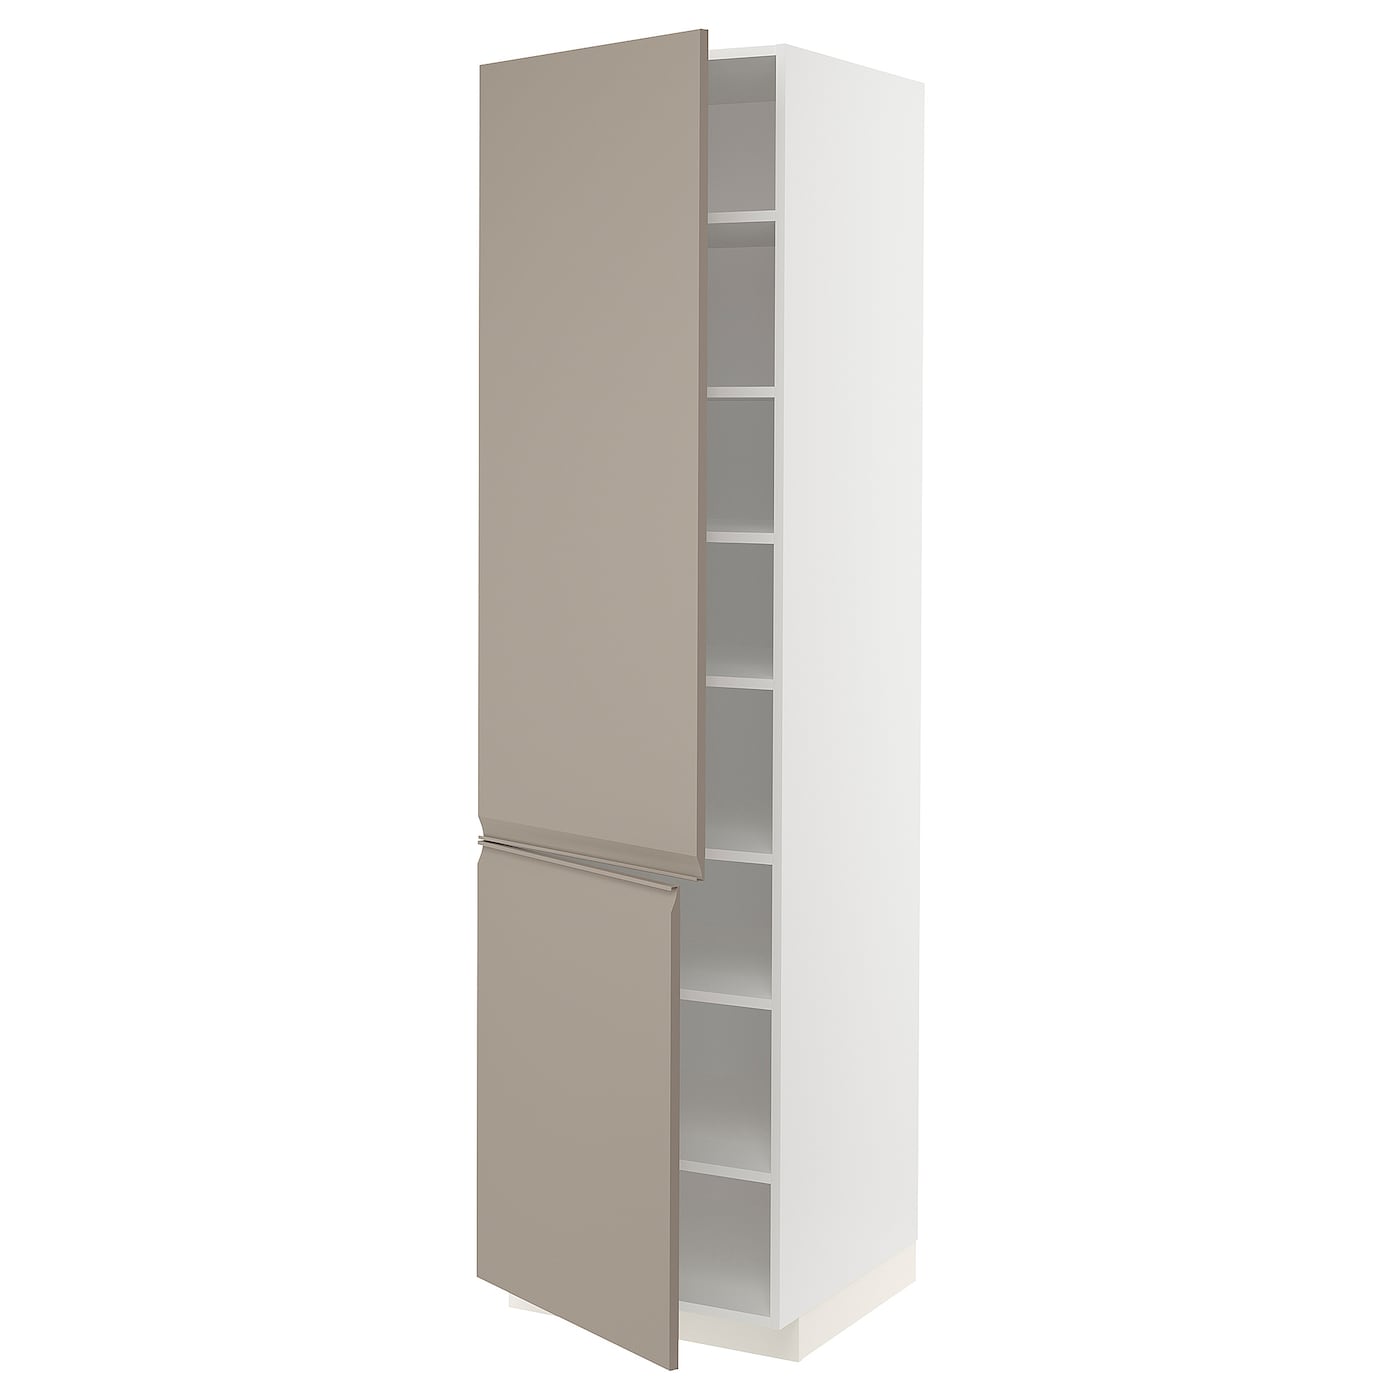 Высокий шкаф - IKEA METOD/МЕТОД ИКЕА, 220х60х60 см, белый/темно-бежевый